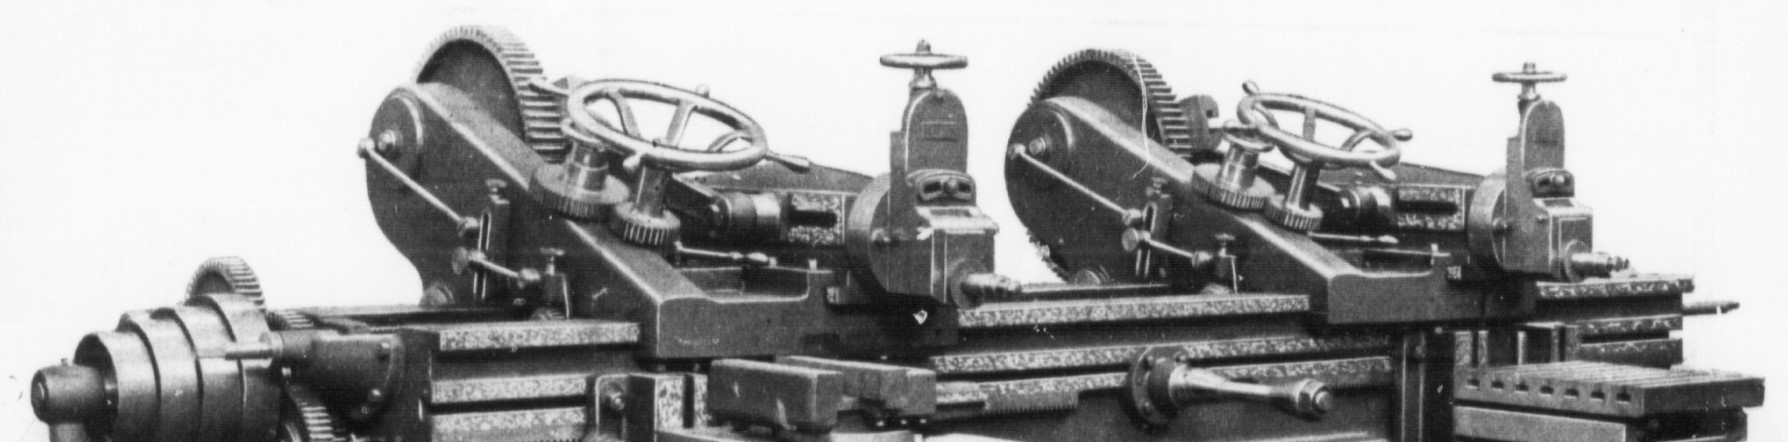 Illustration of machinery